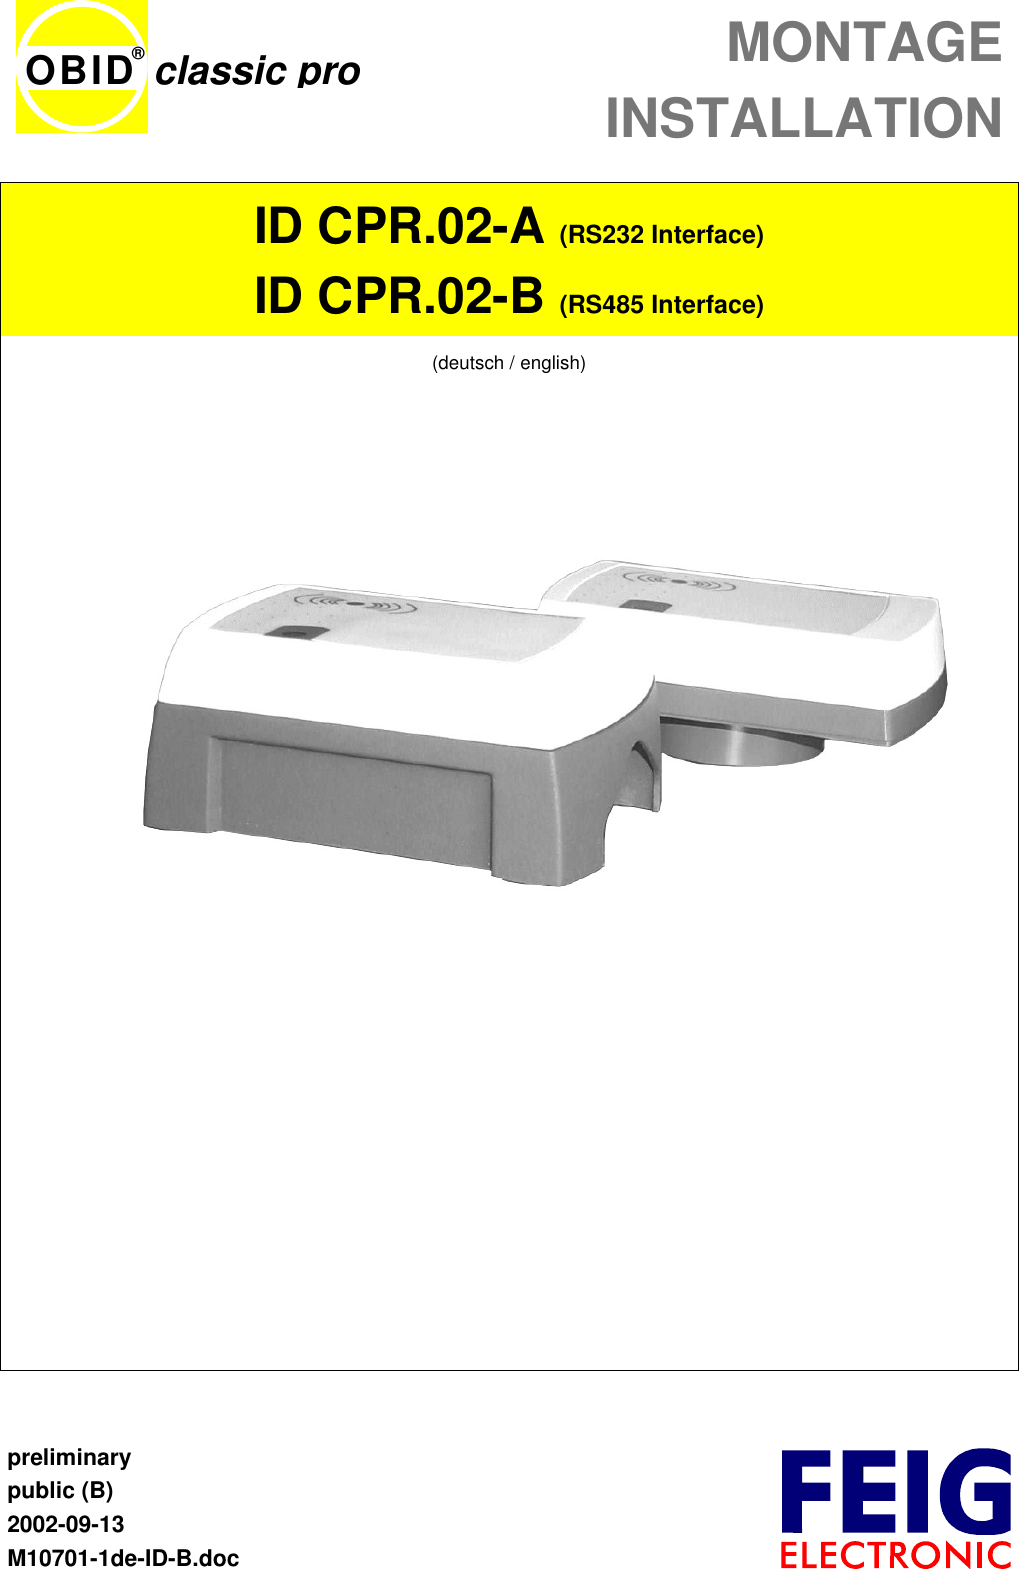 MONTAGEINSTALLATIONpreliminarypublic (B)2002-09-13M10701-1de-ID-B.docOBID® classic proID CPR.02-A (RS232 Interface)ID CPR.02-B (RS485 Interface)(deutsch / english)